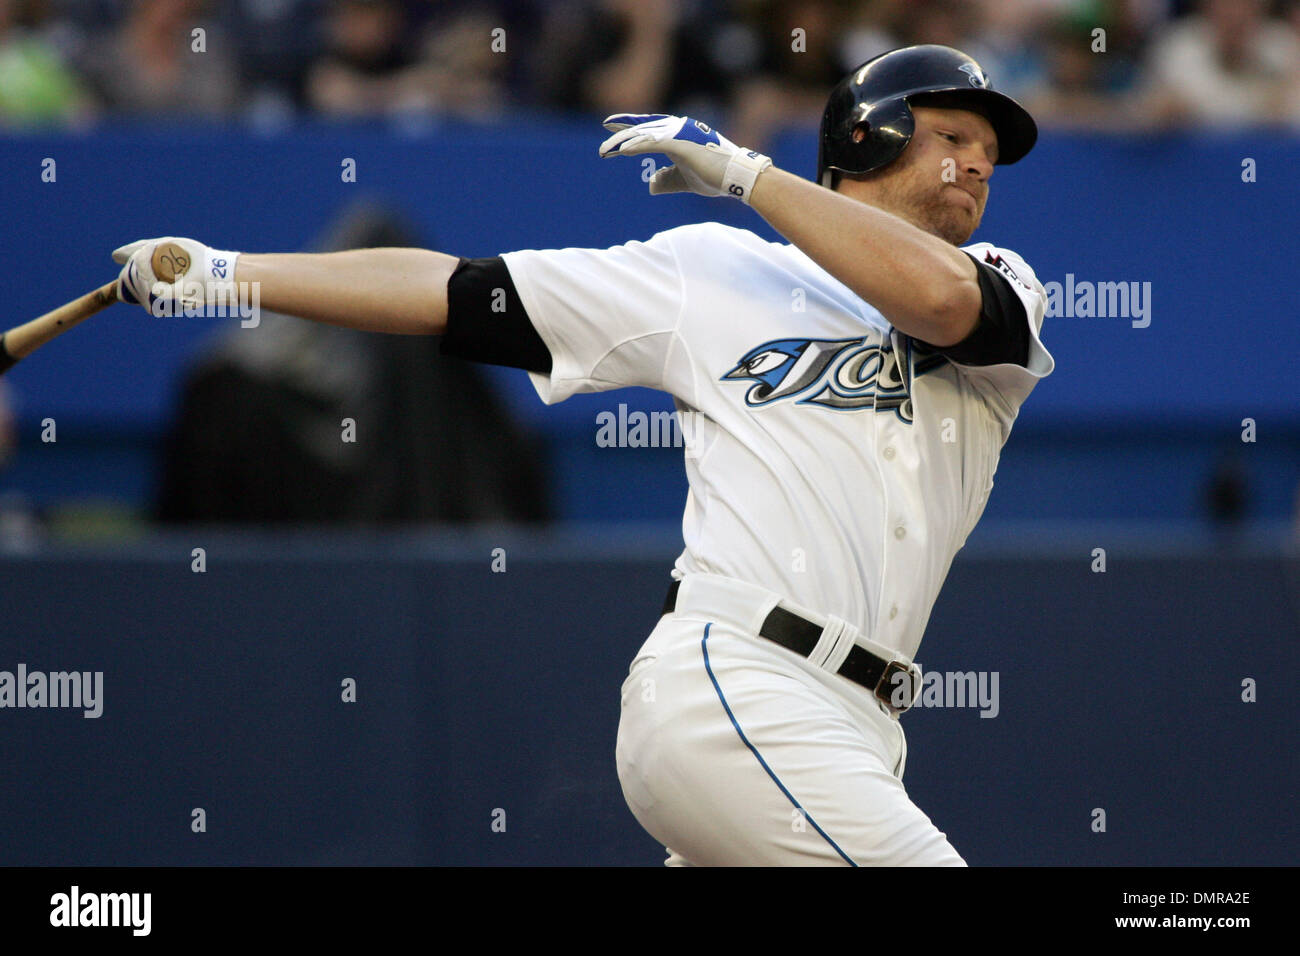 Toronto Blue Jays left fielder Adam Lind bats against the Tampa Bay